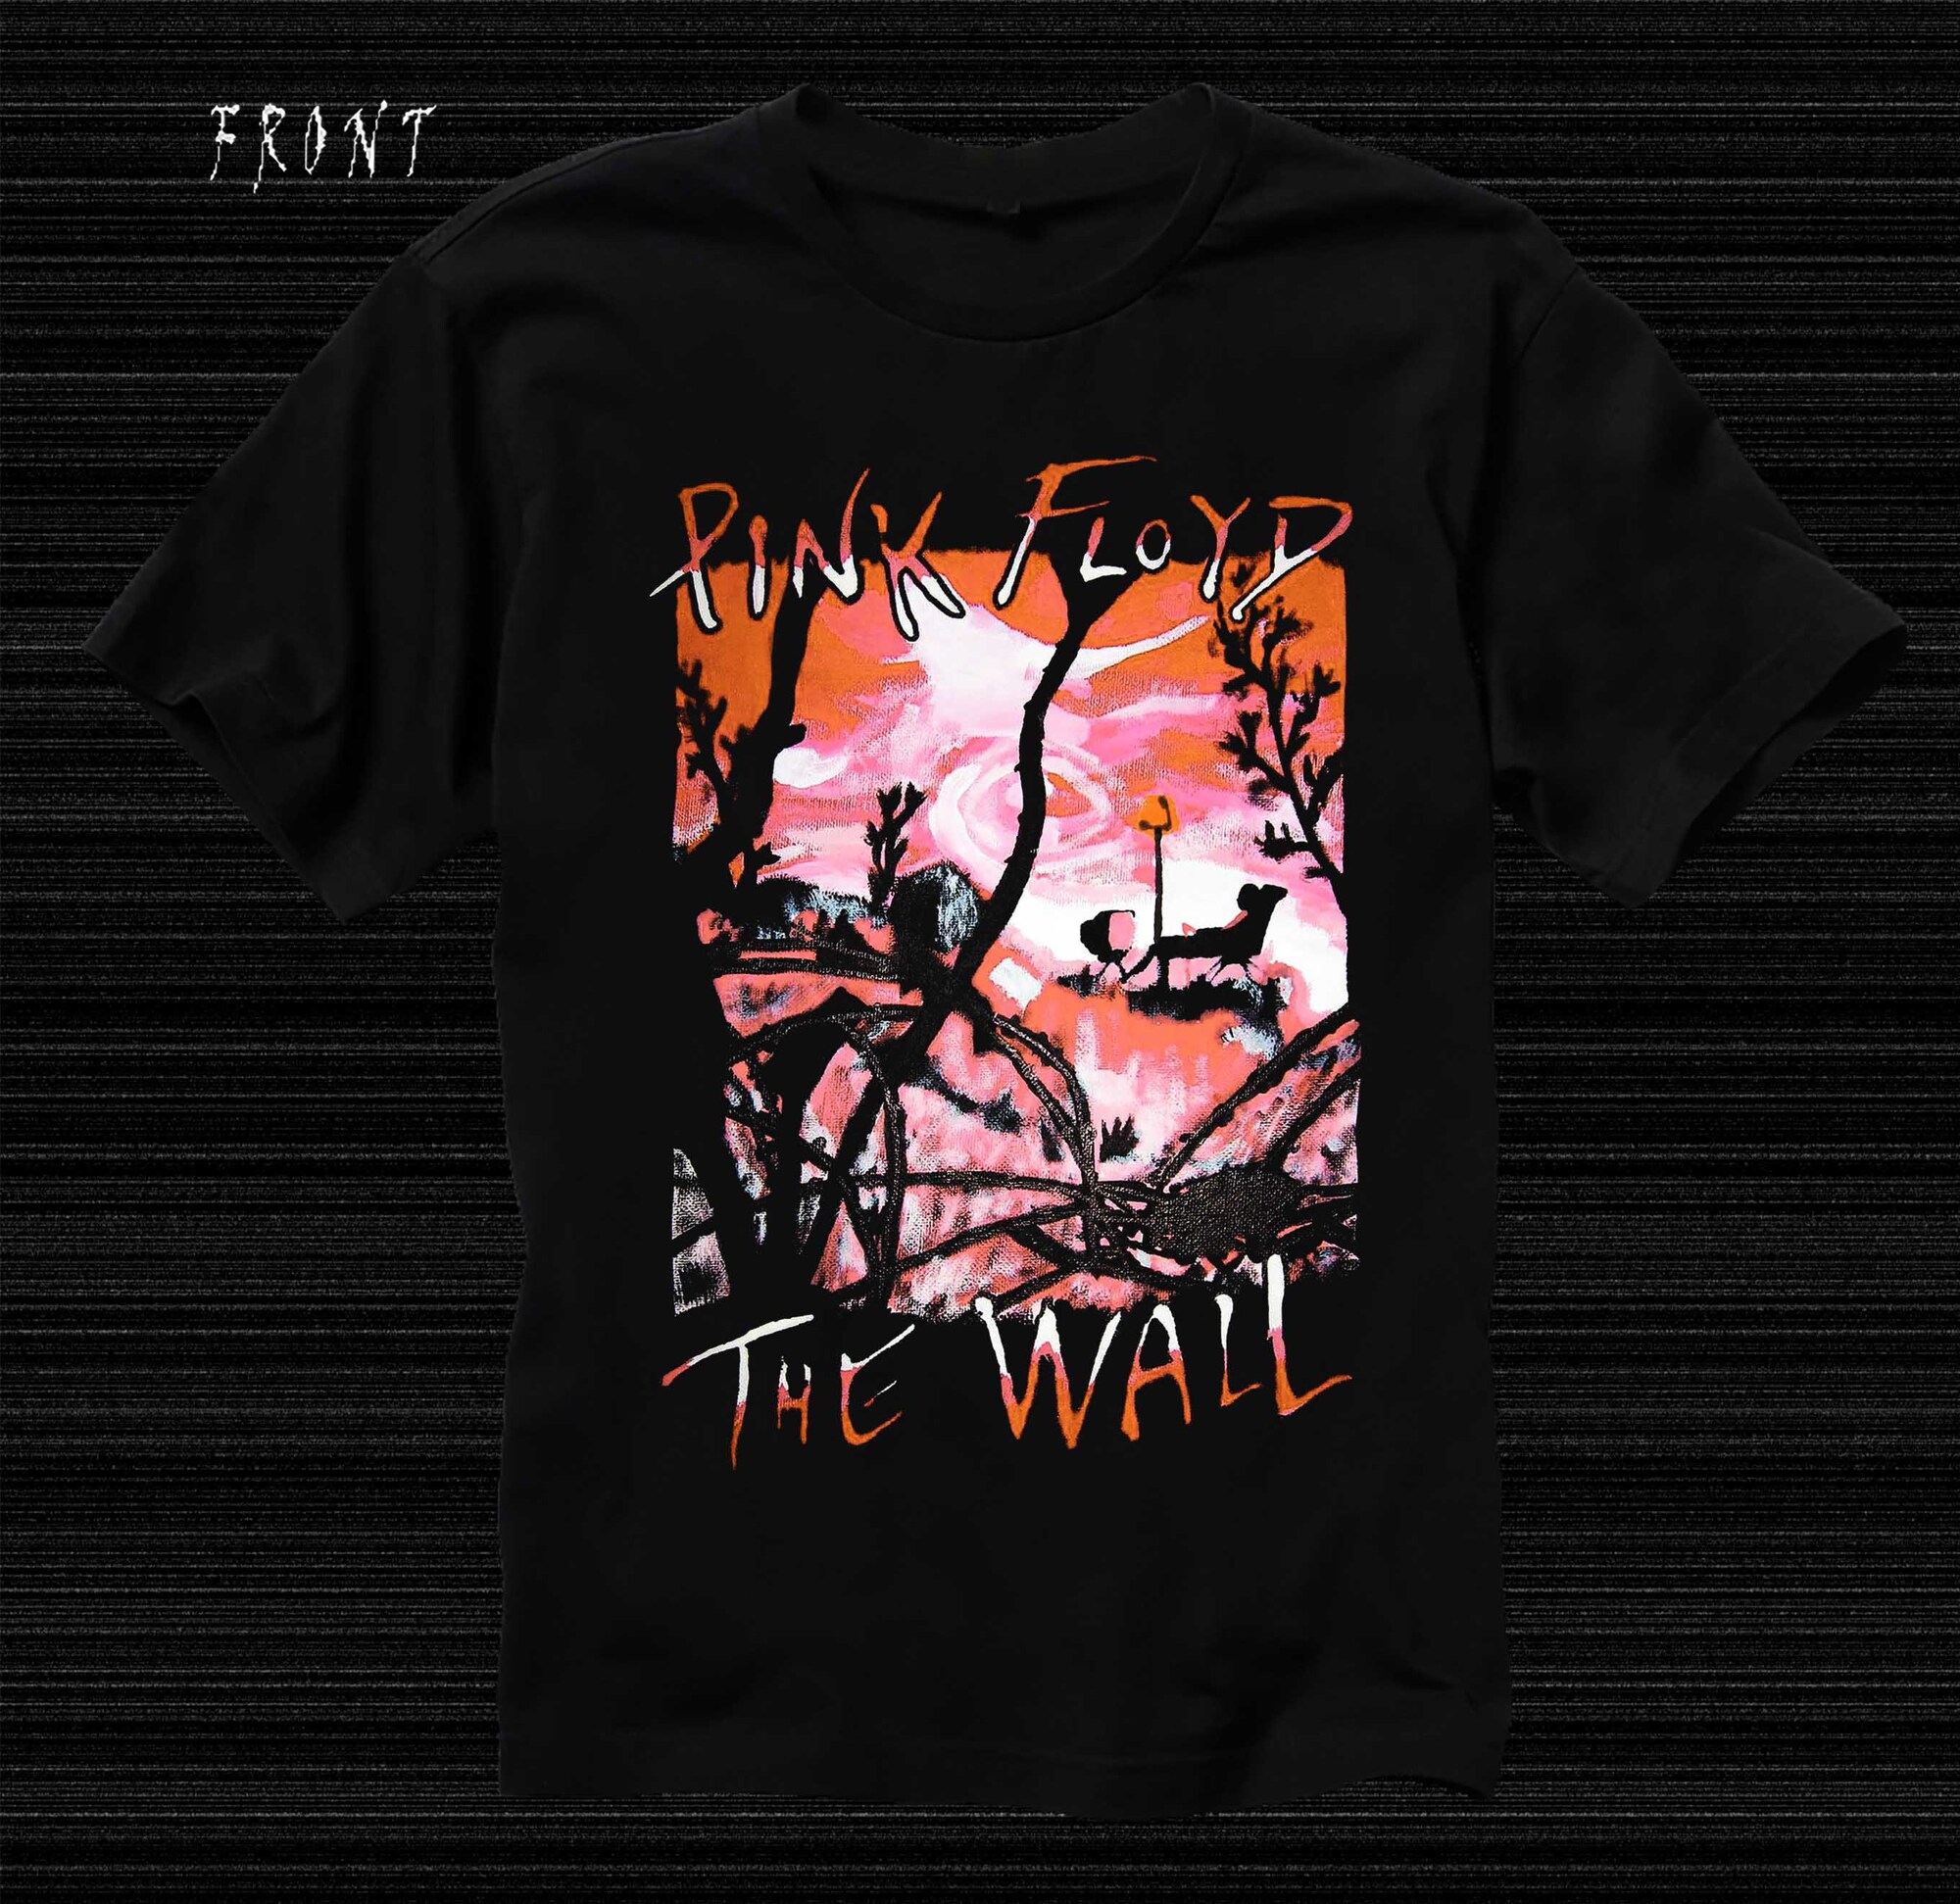 Pink  Floyd- The Wall  - t-shirt